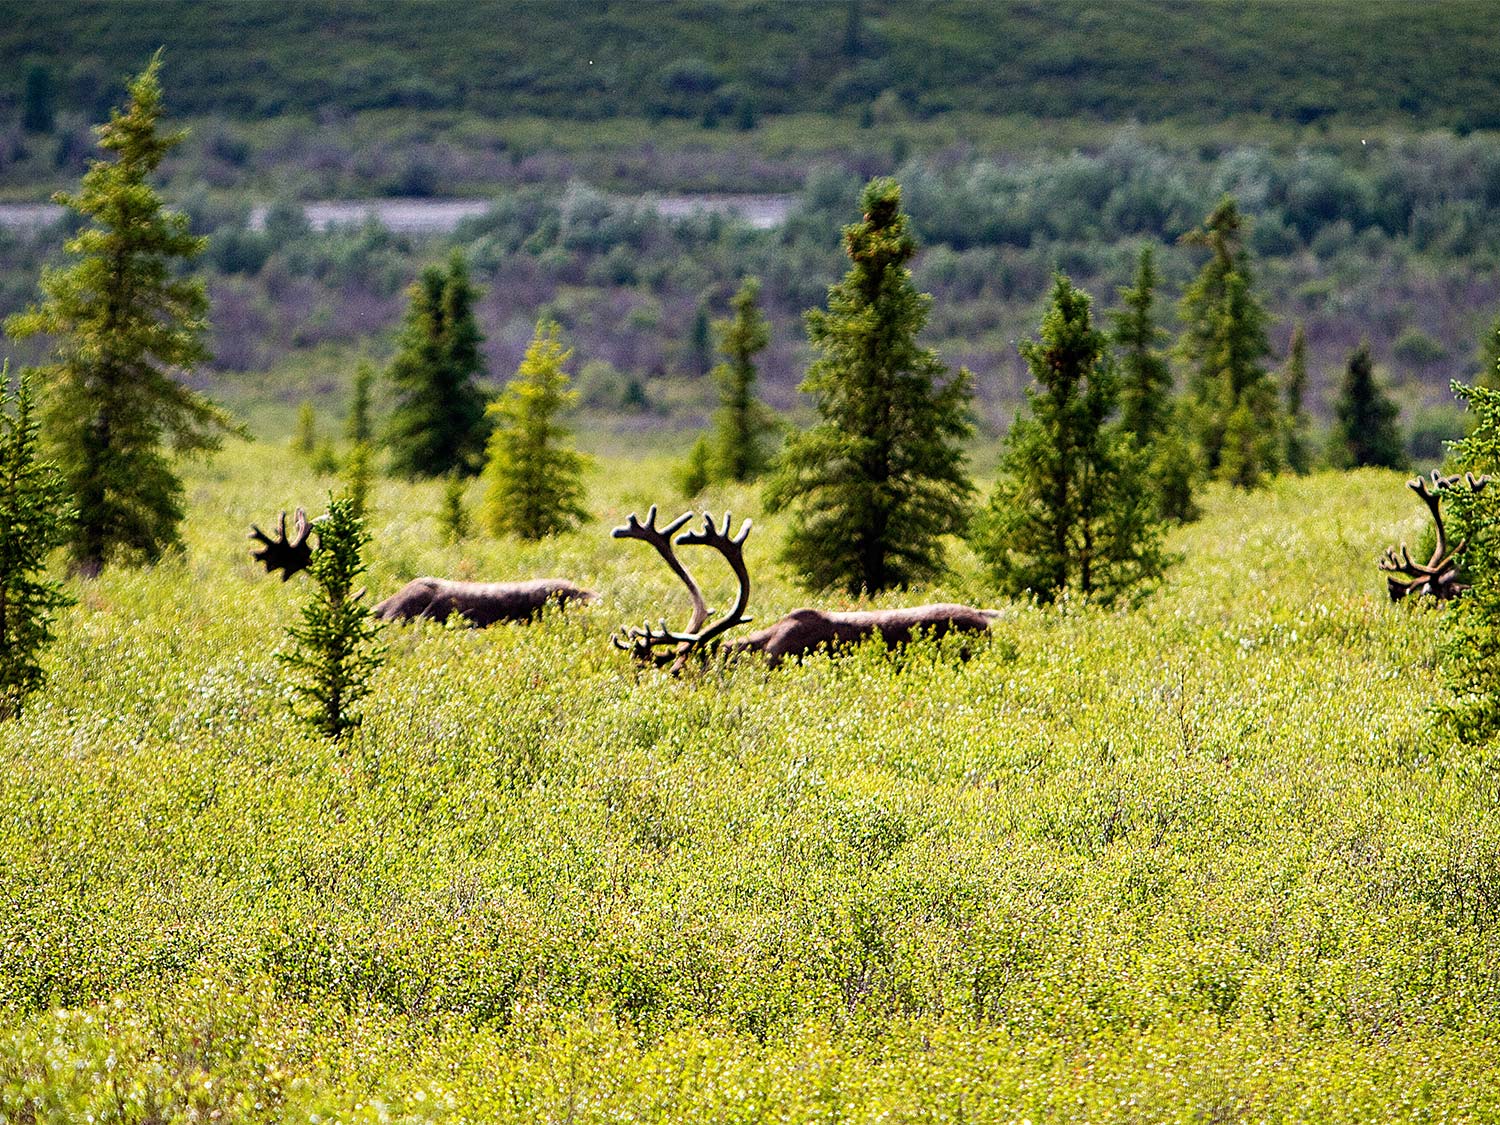 Bull caribou walking through tall grass and timber in Alaska.